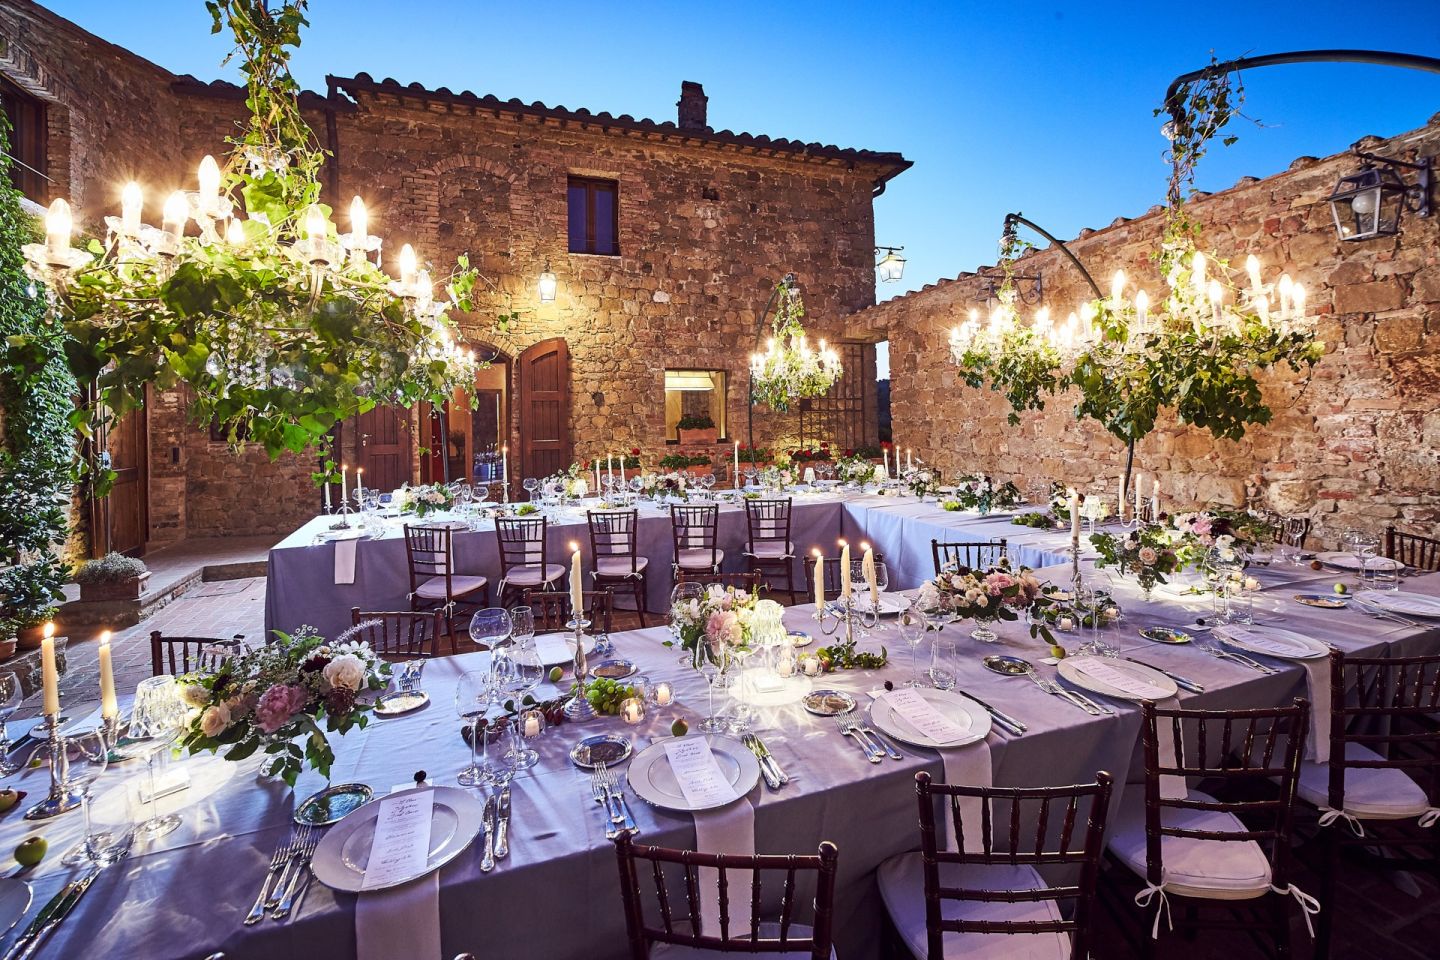 Italian Wedding Reception Themes, Decor and Ideas - by Jules Bower